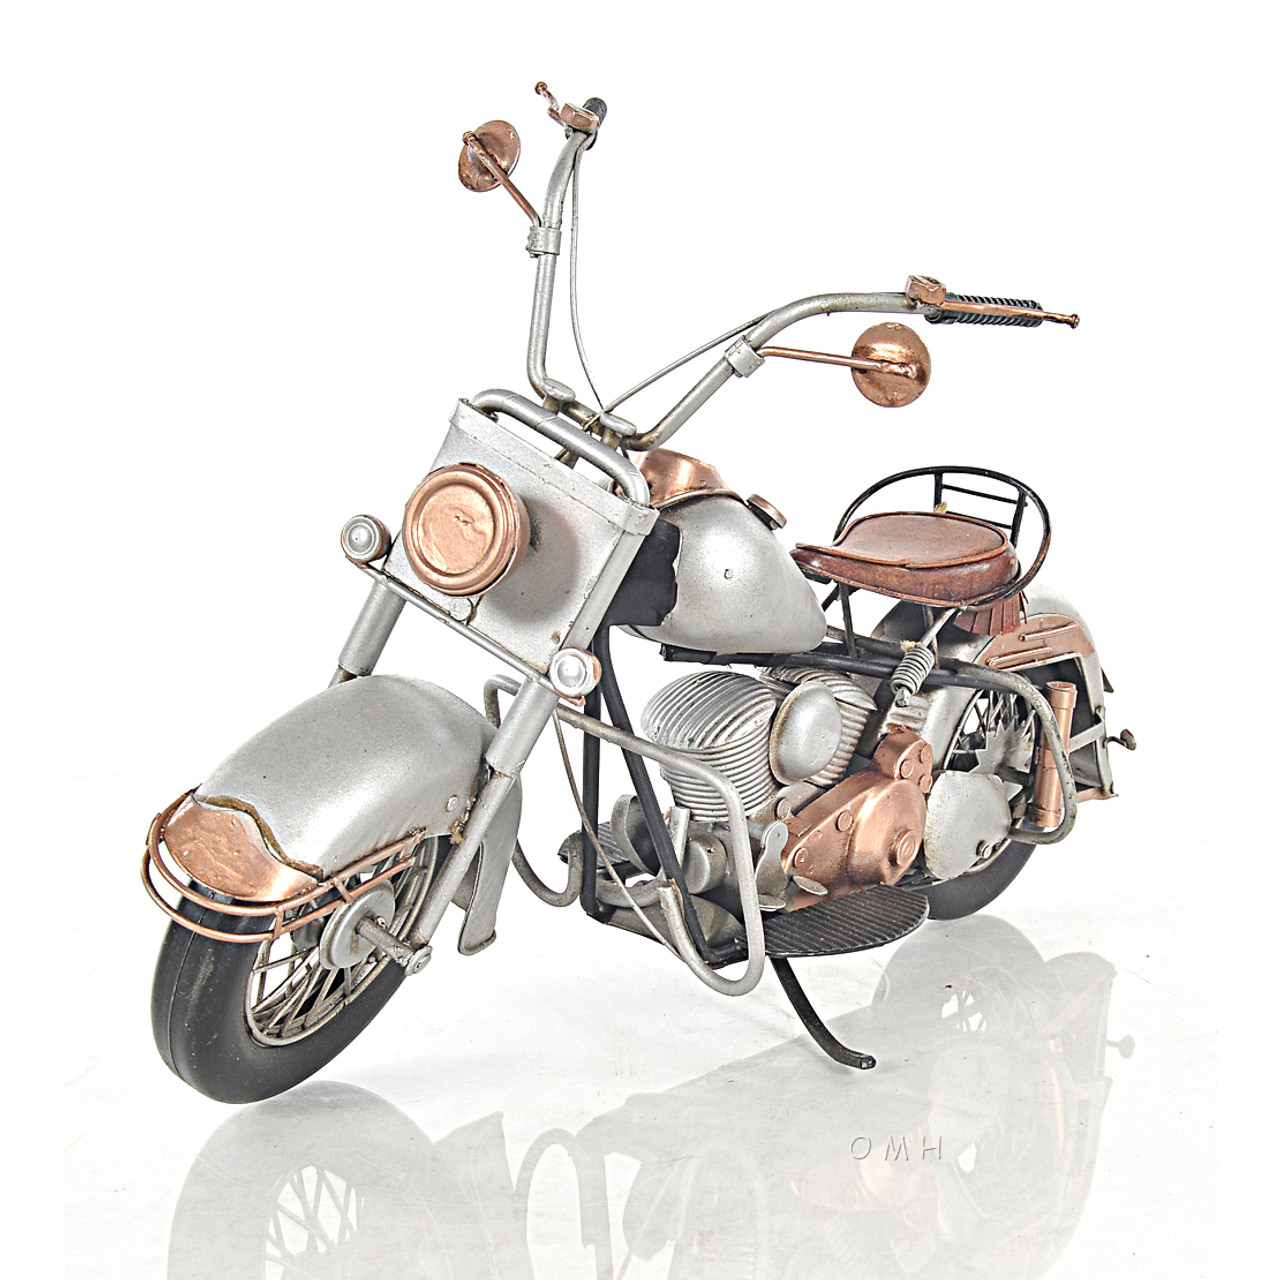 harley davidson motorcycles models